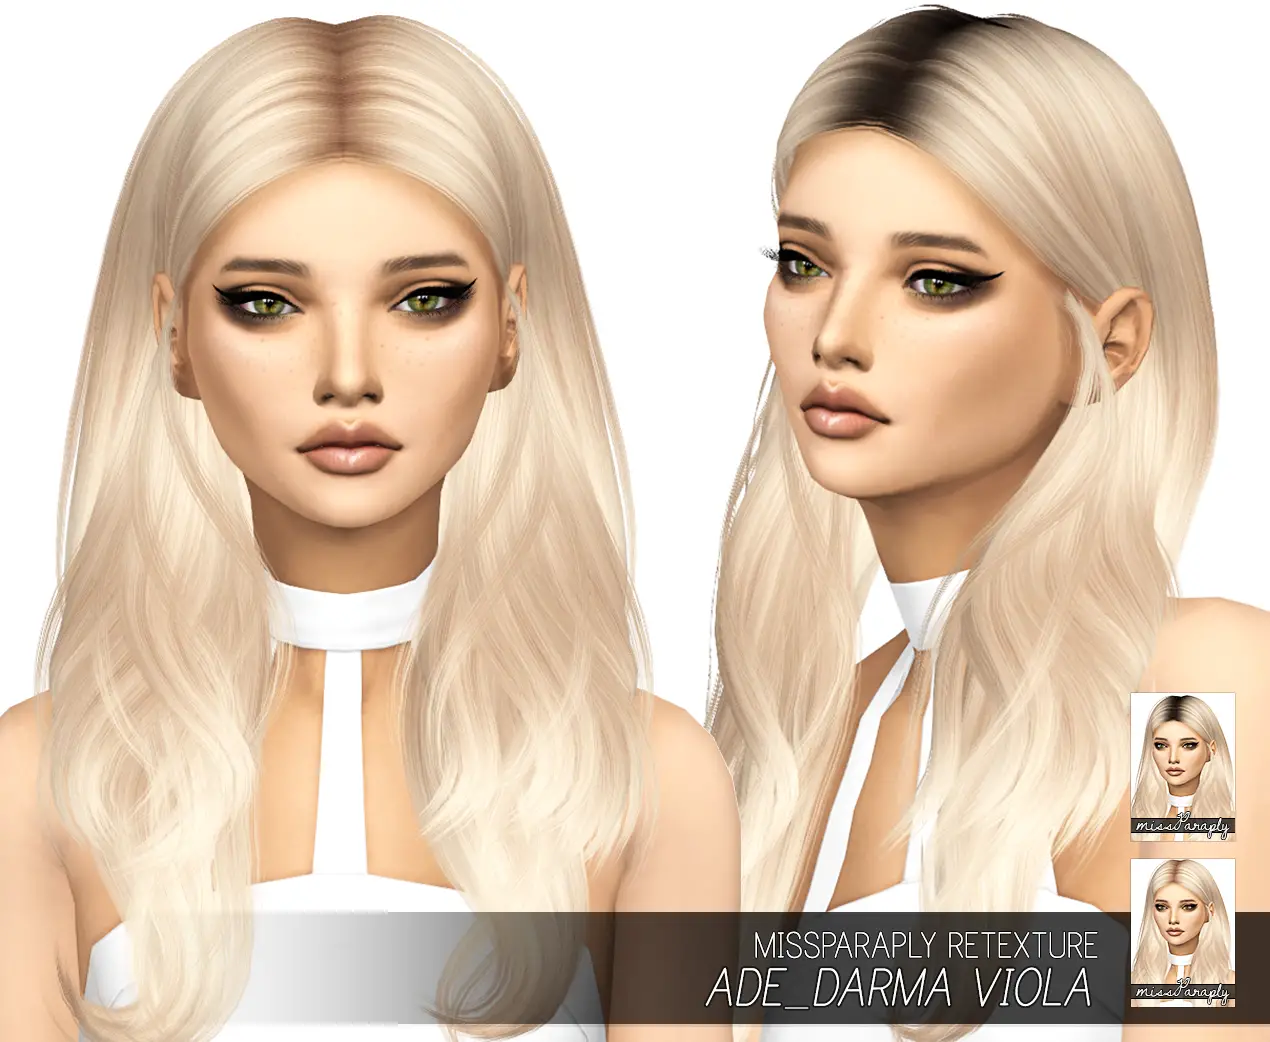 Sims 4 Hairs Miss Paraply Adedarma Viola Hair Retextured